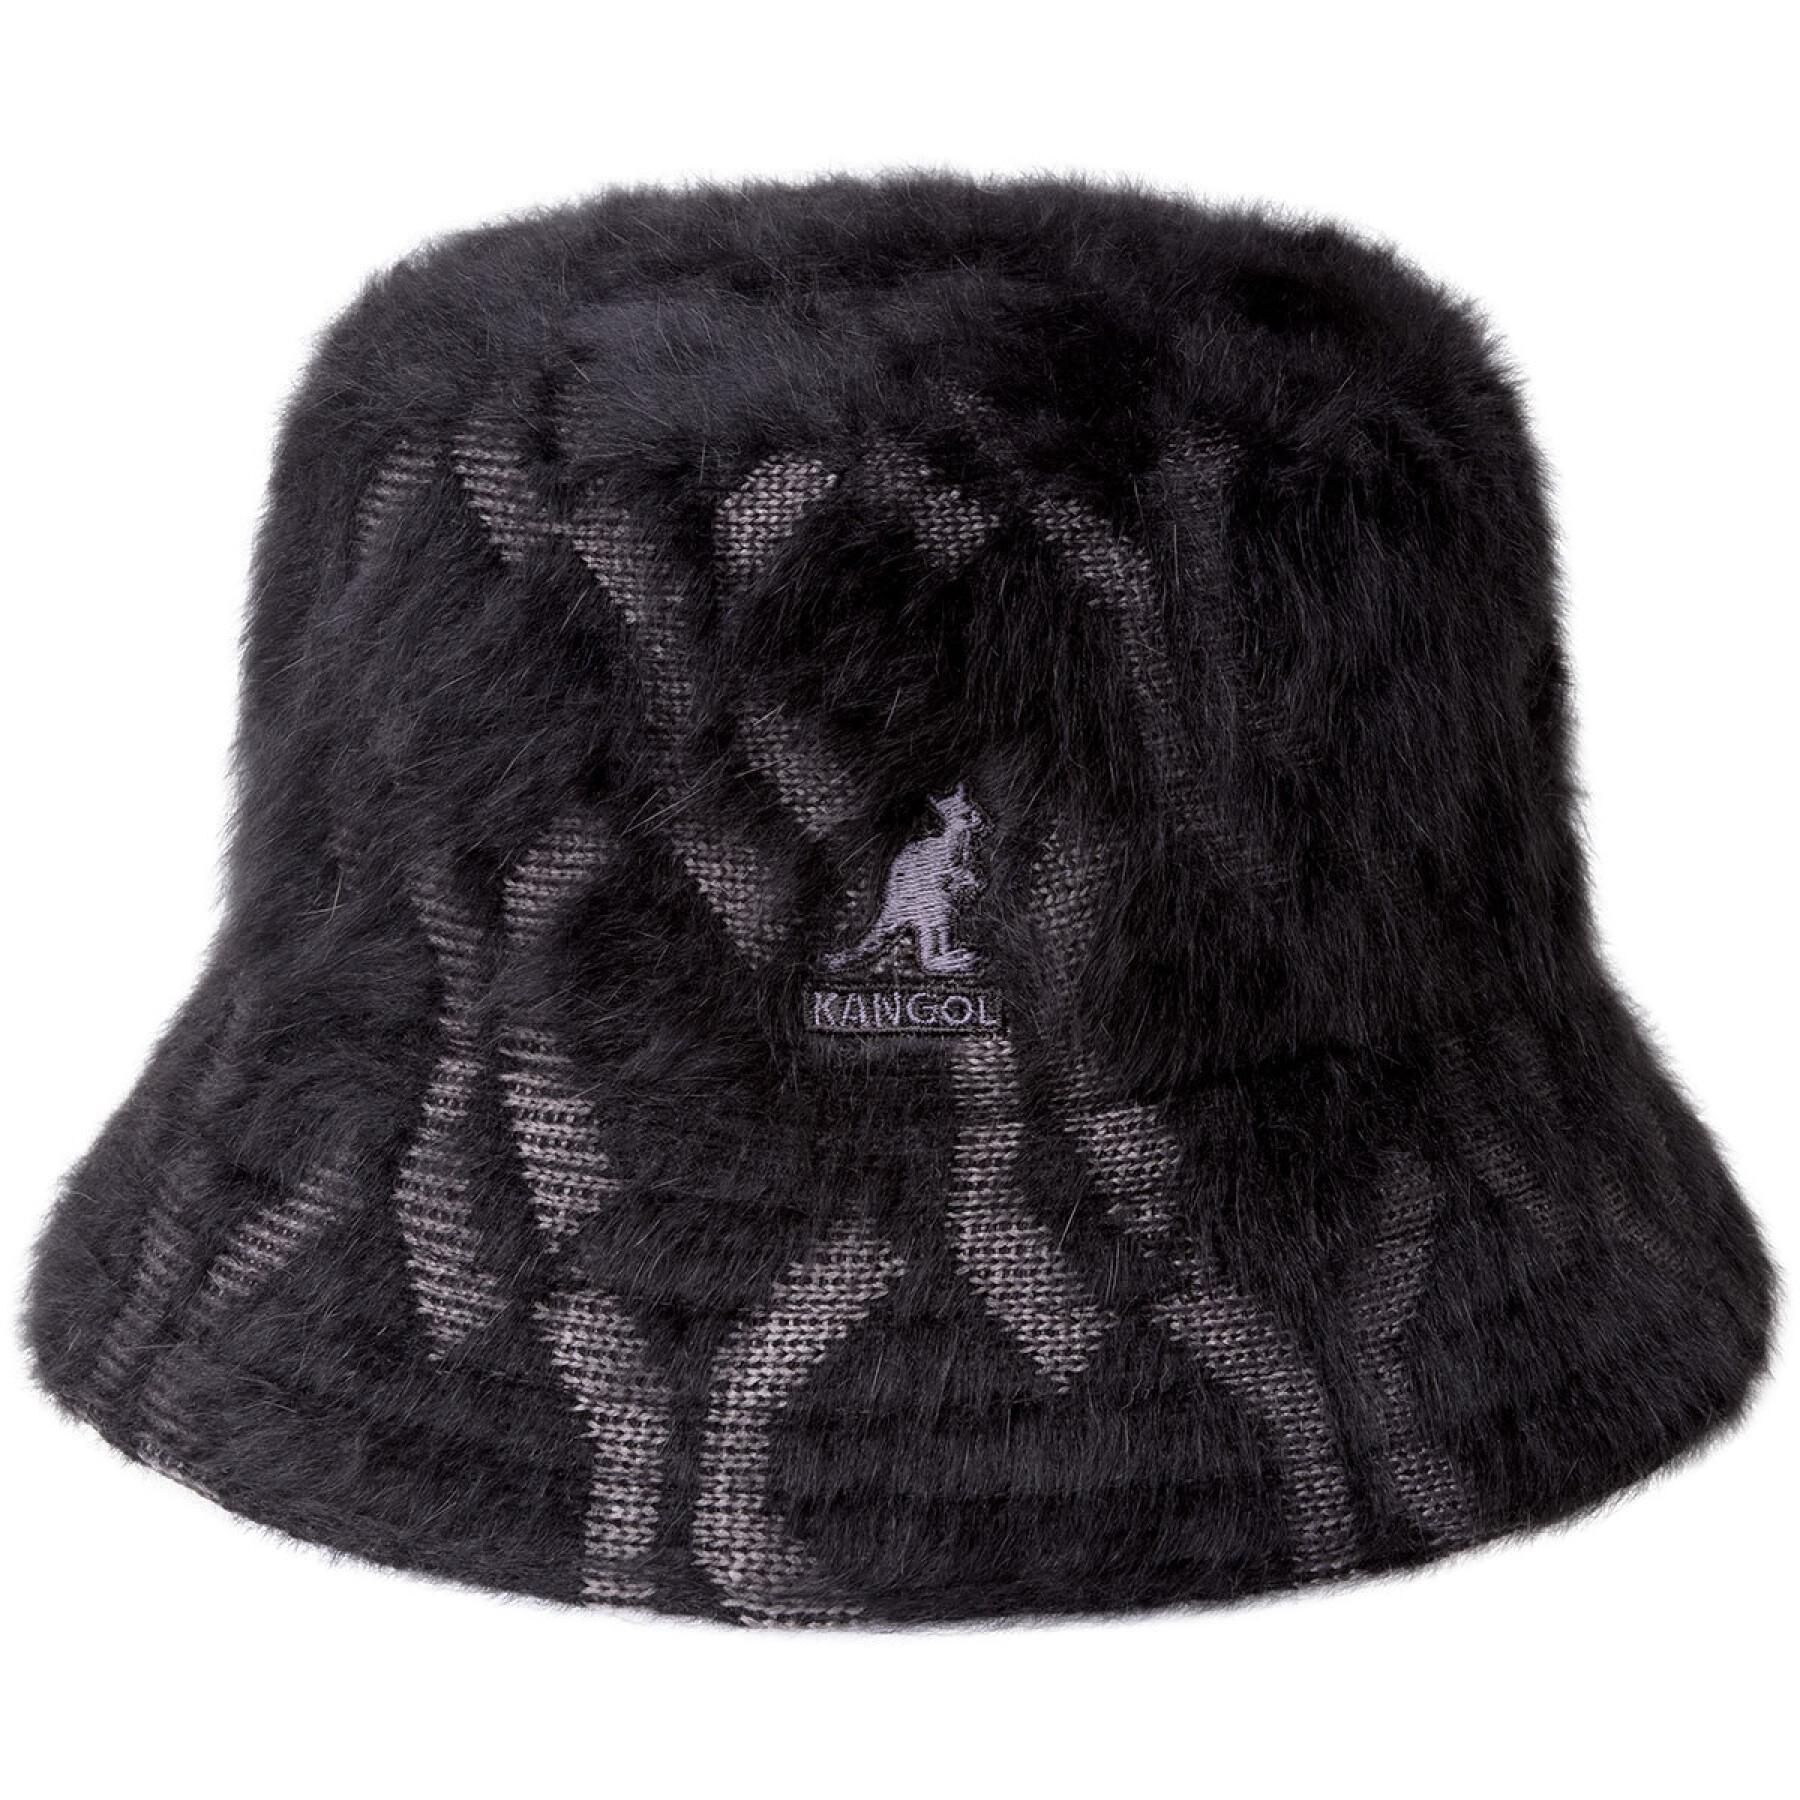 Kangol Furgora New Wave Lahinch bucket hat